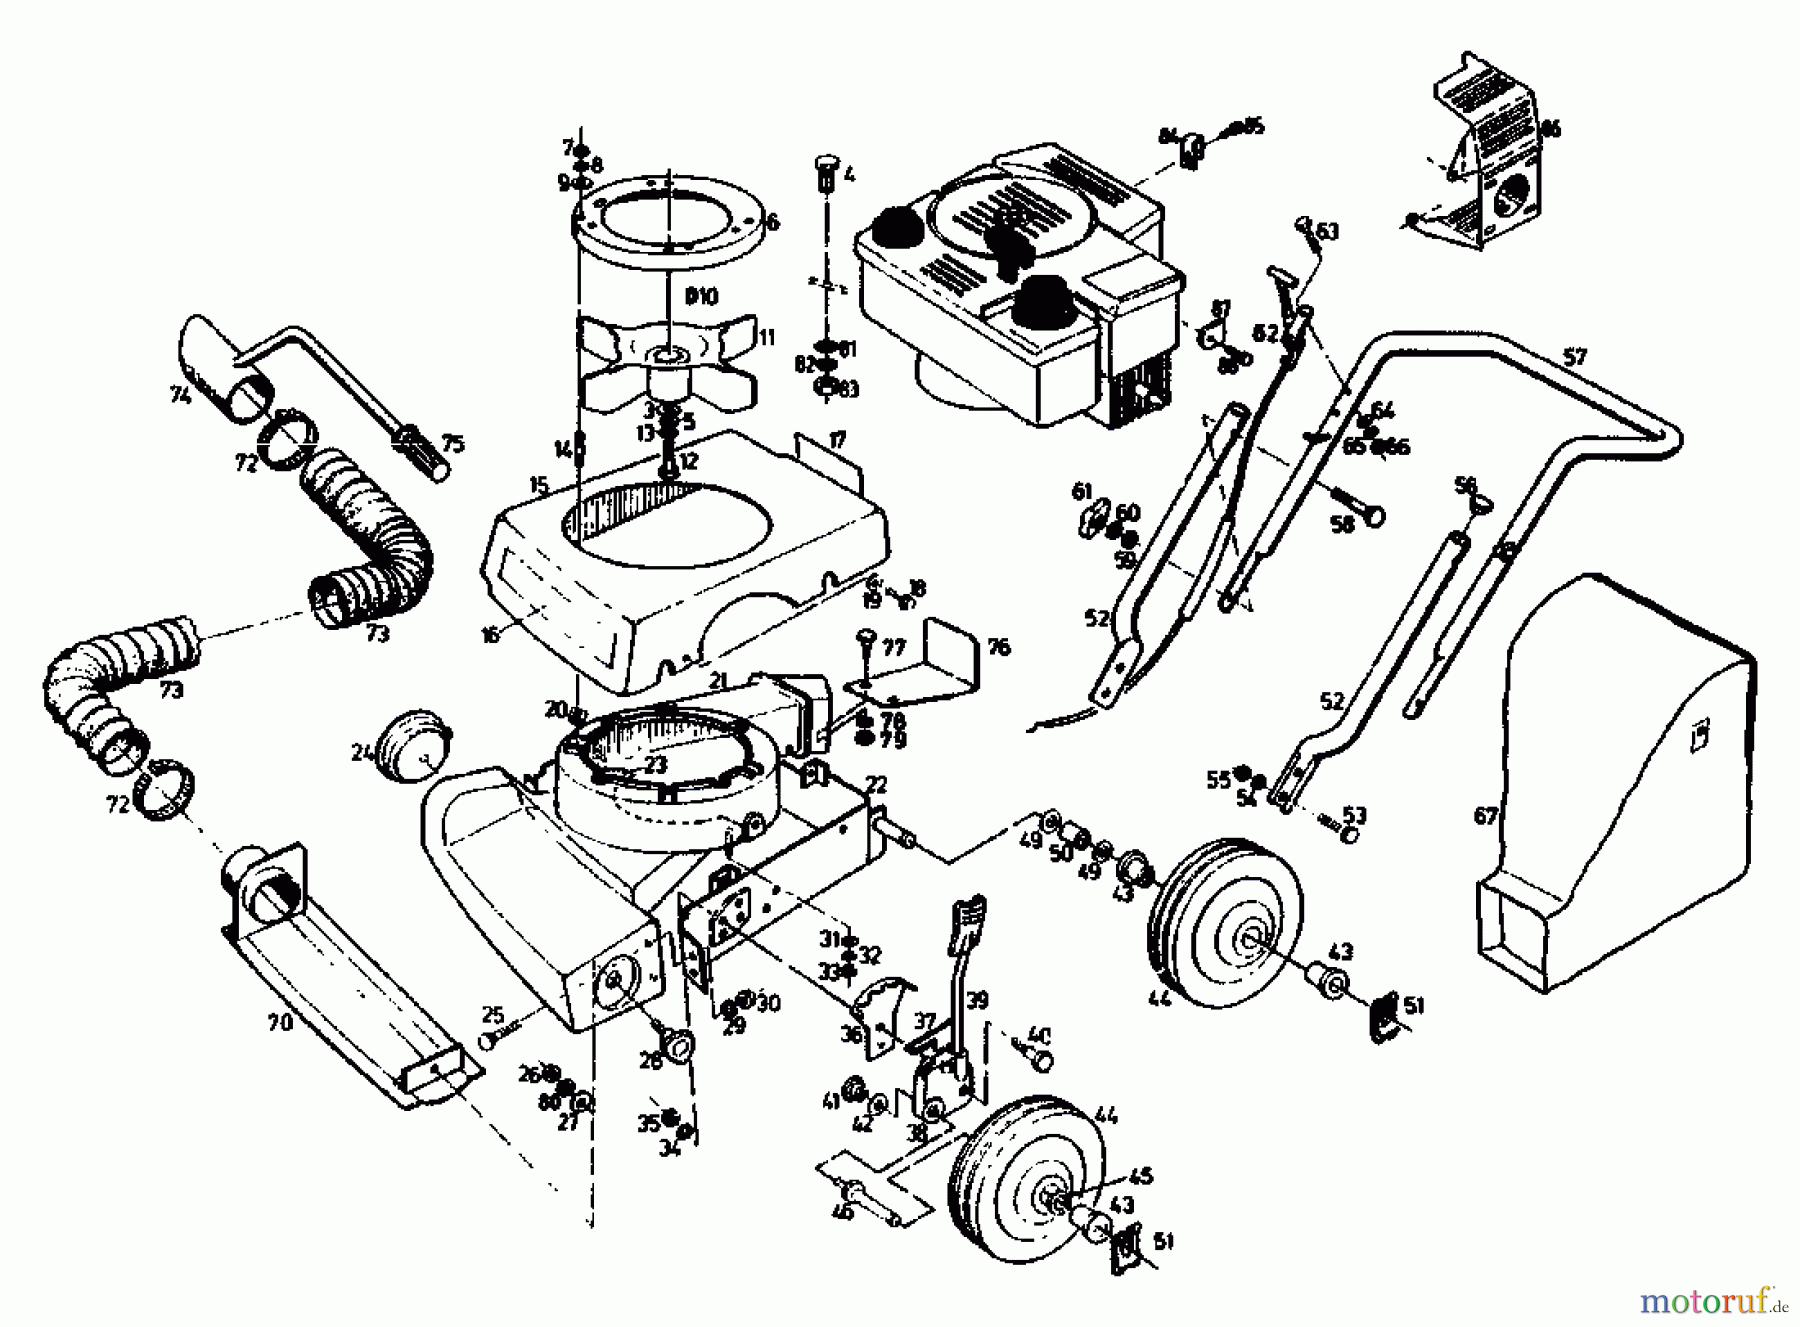  Gutbrod Souffleur de feuille, Aspirateur de feuille LB 55-45 02871.01  (1988) Machine de base